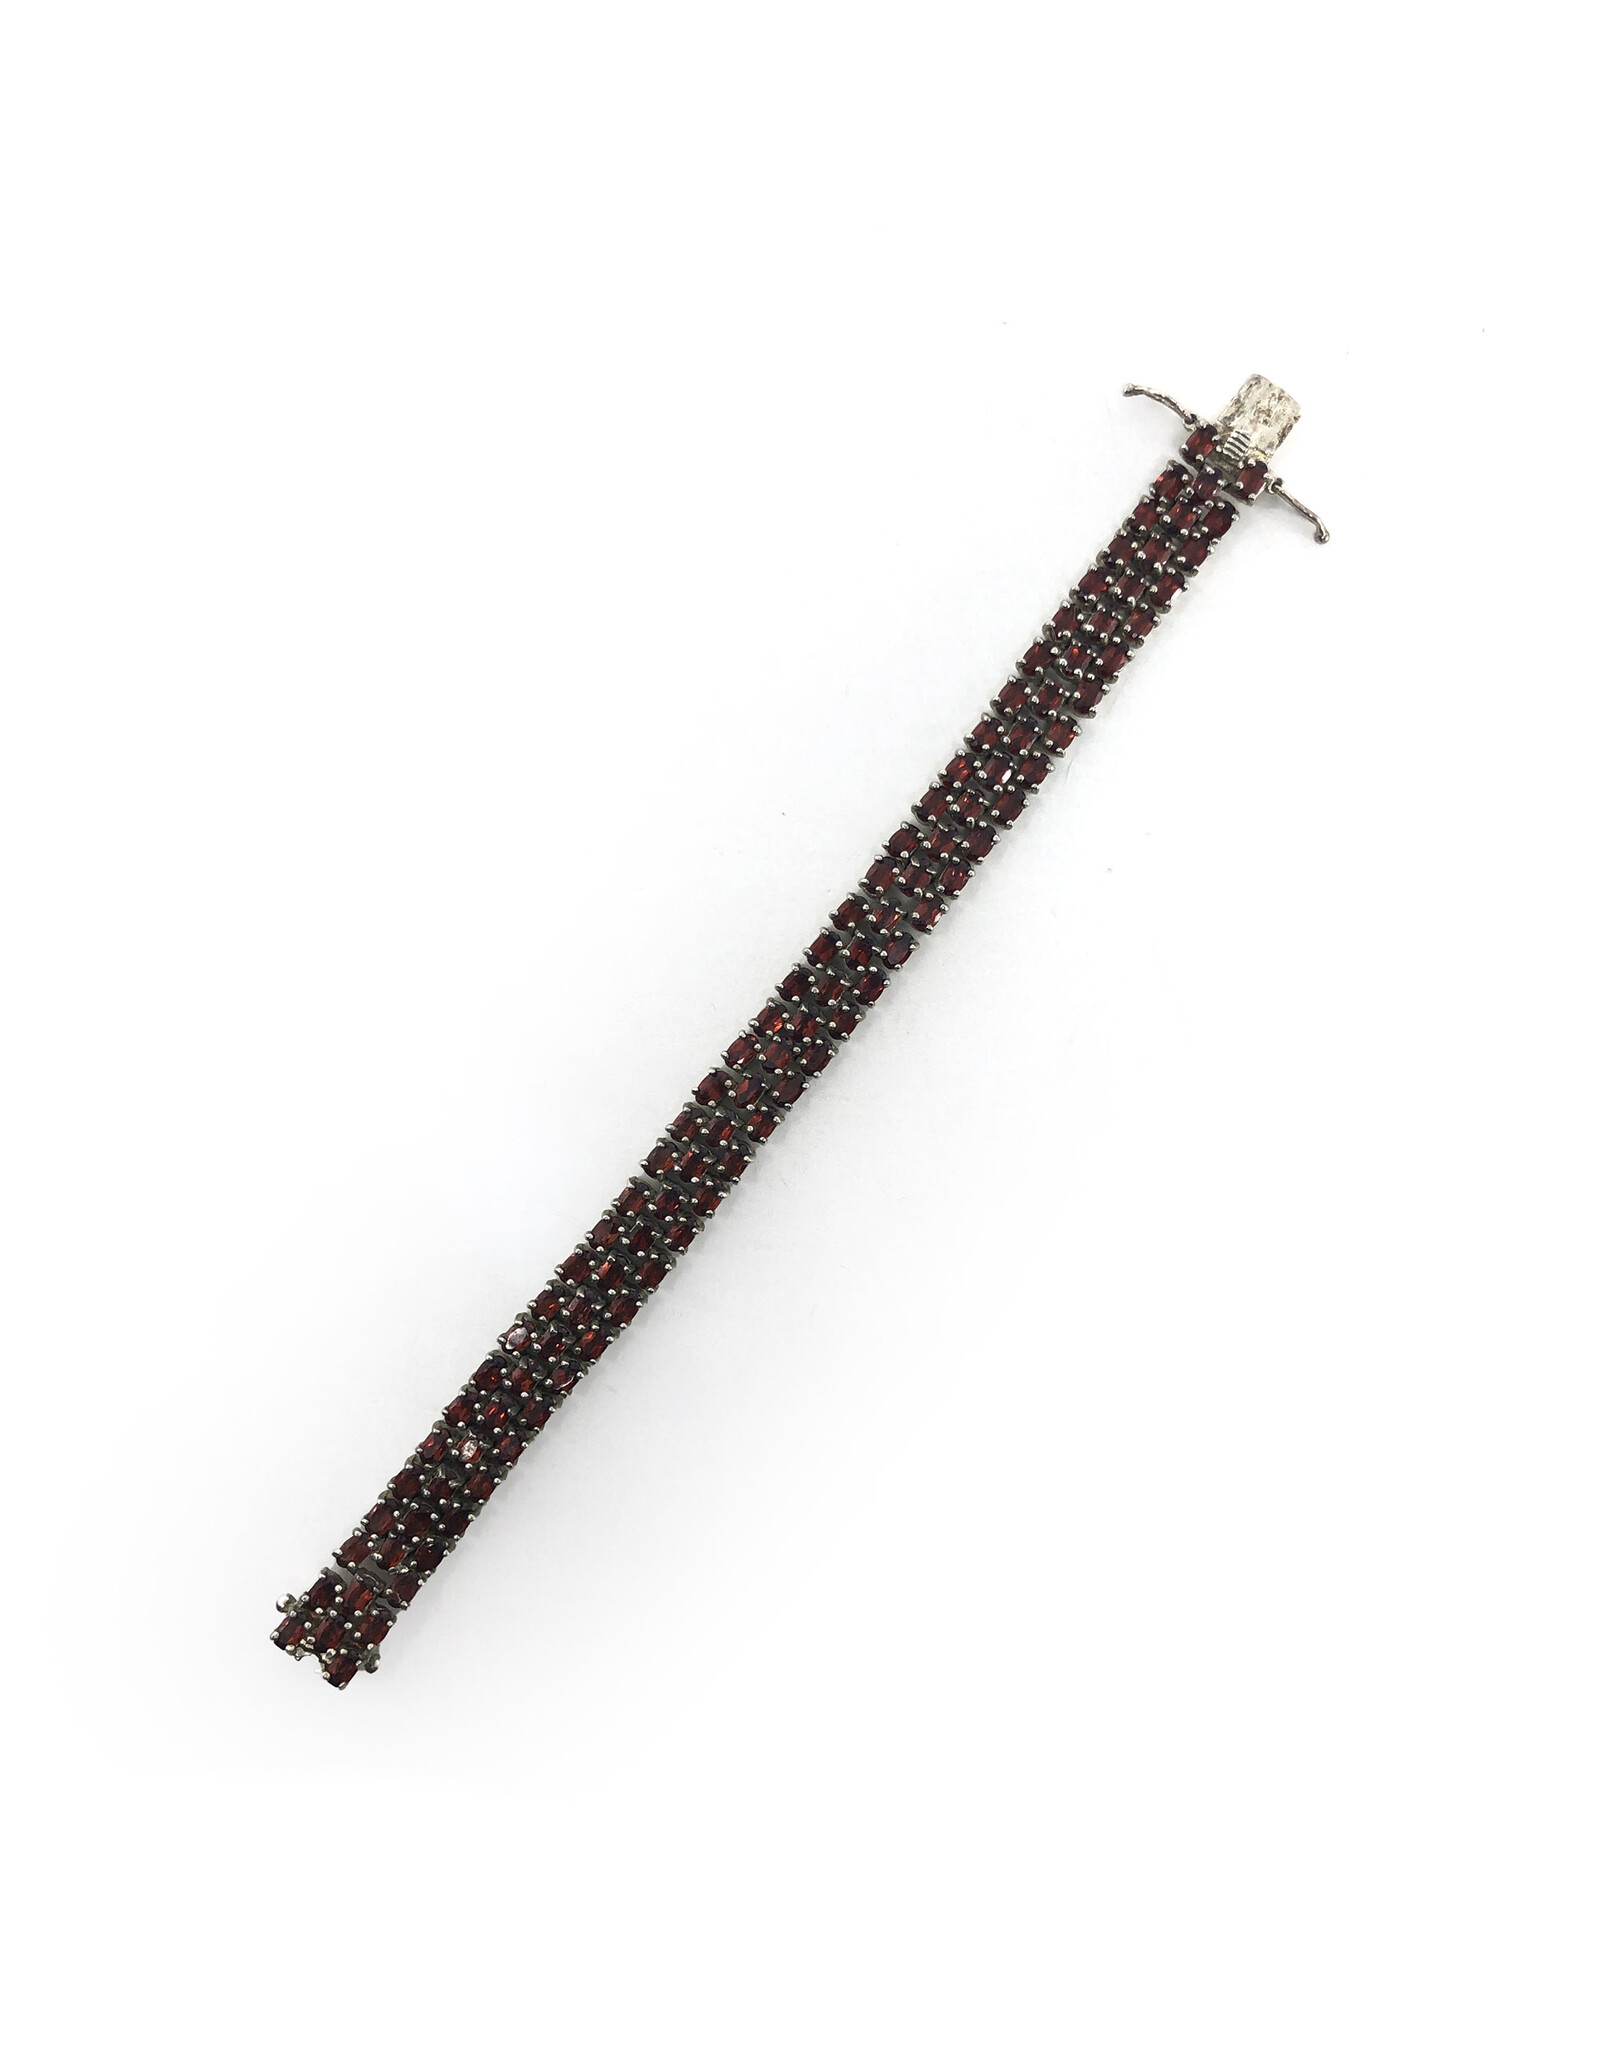 Sterling Bracelet with 101 Medium Garnets